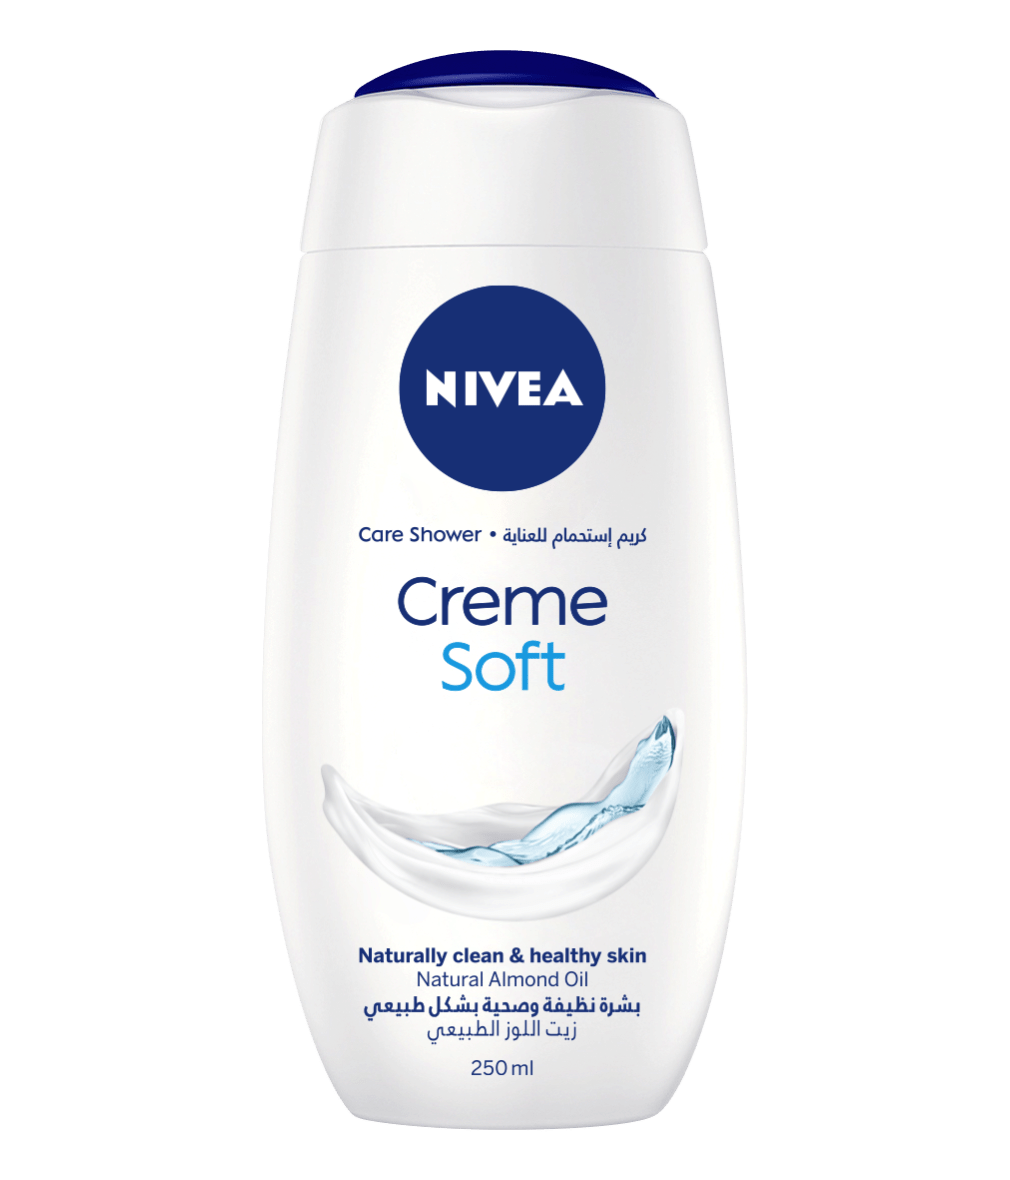 80802 Nivea Creme soft Care shower 250ml clean packshot bi-lingual